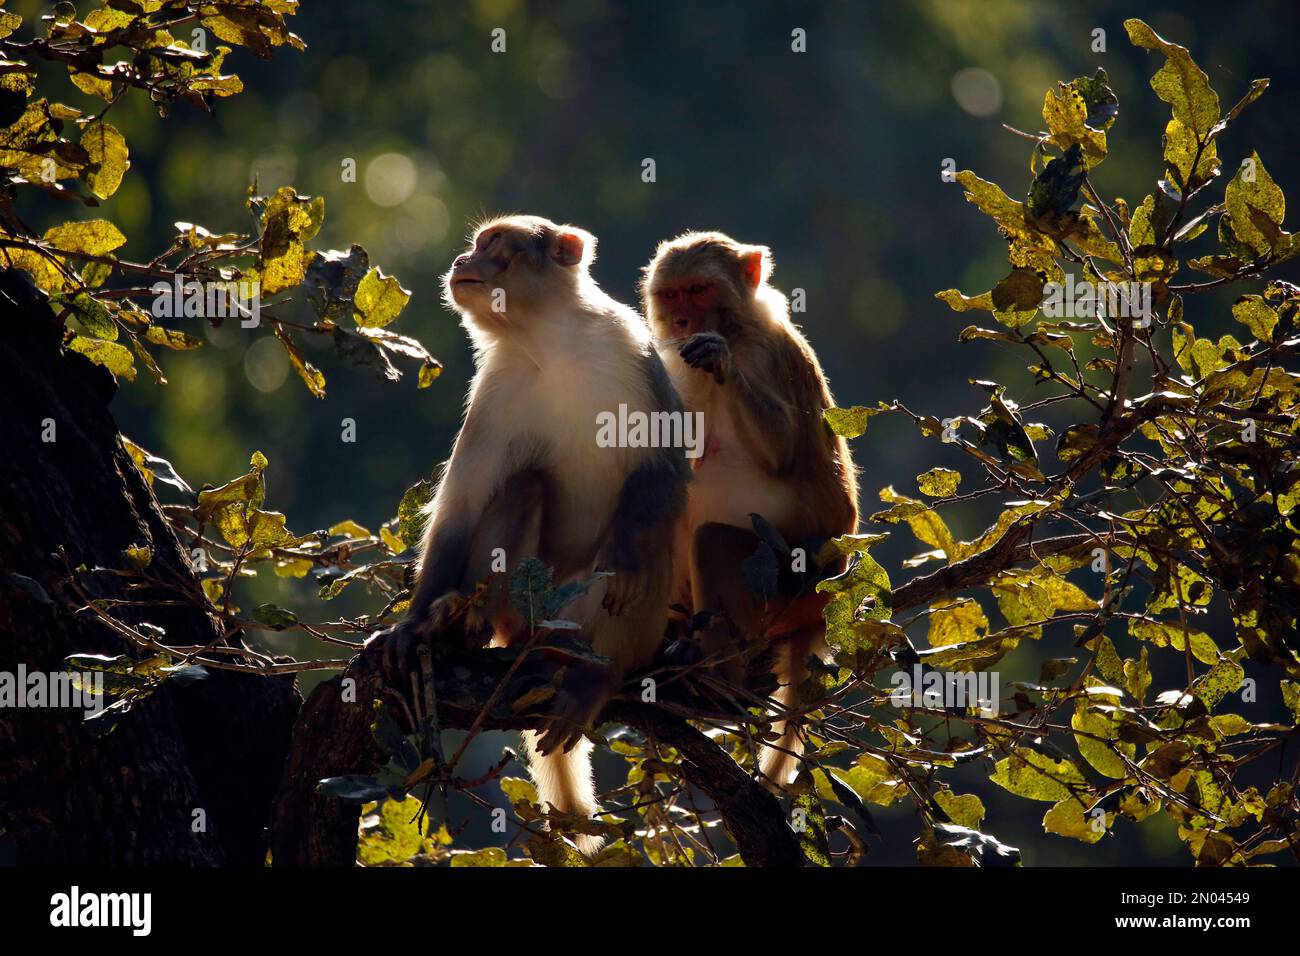 Rhésus macaques (Macaca mulatta) sur la branche, le dimanche matin. Parc national Jim Corbett, Inde Banque D'Images